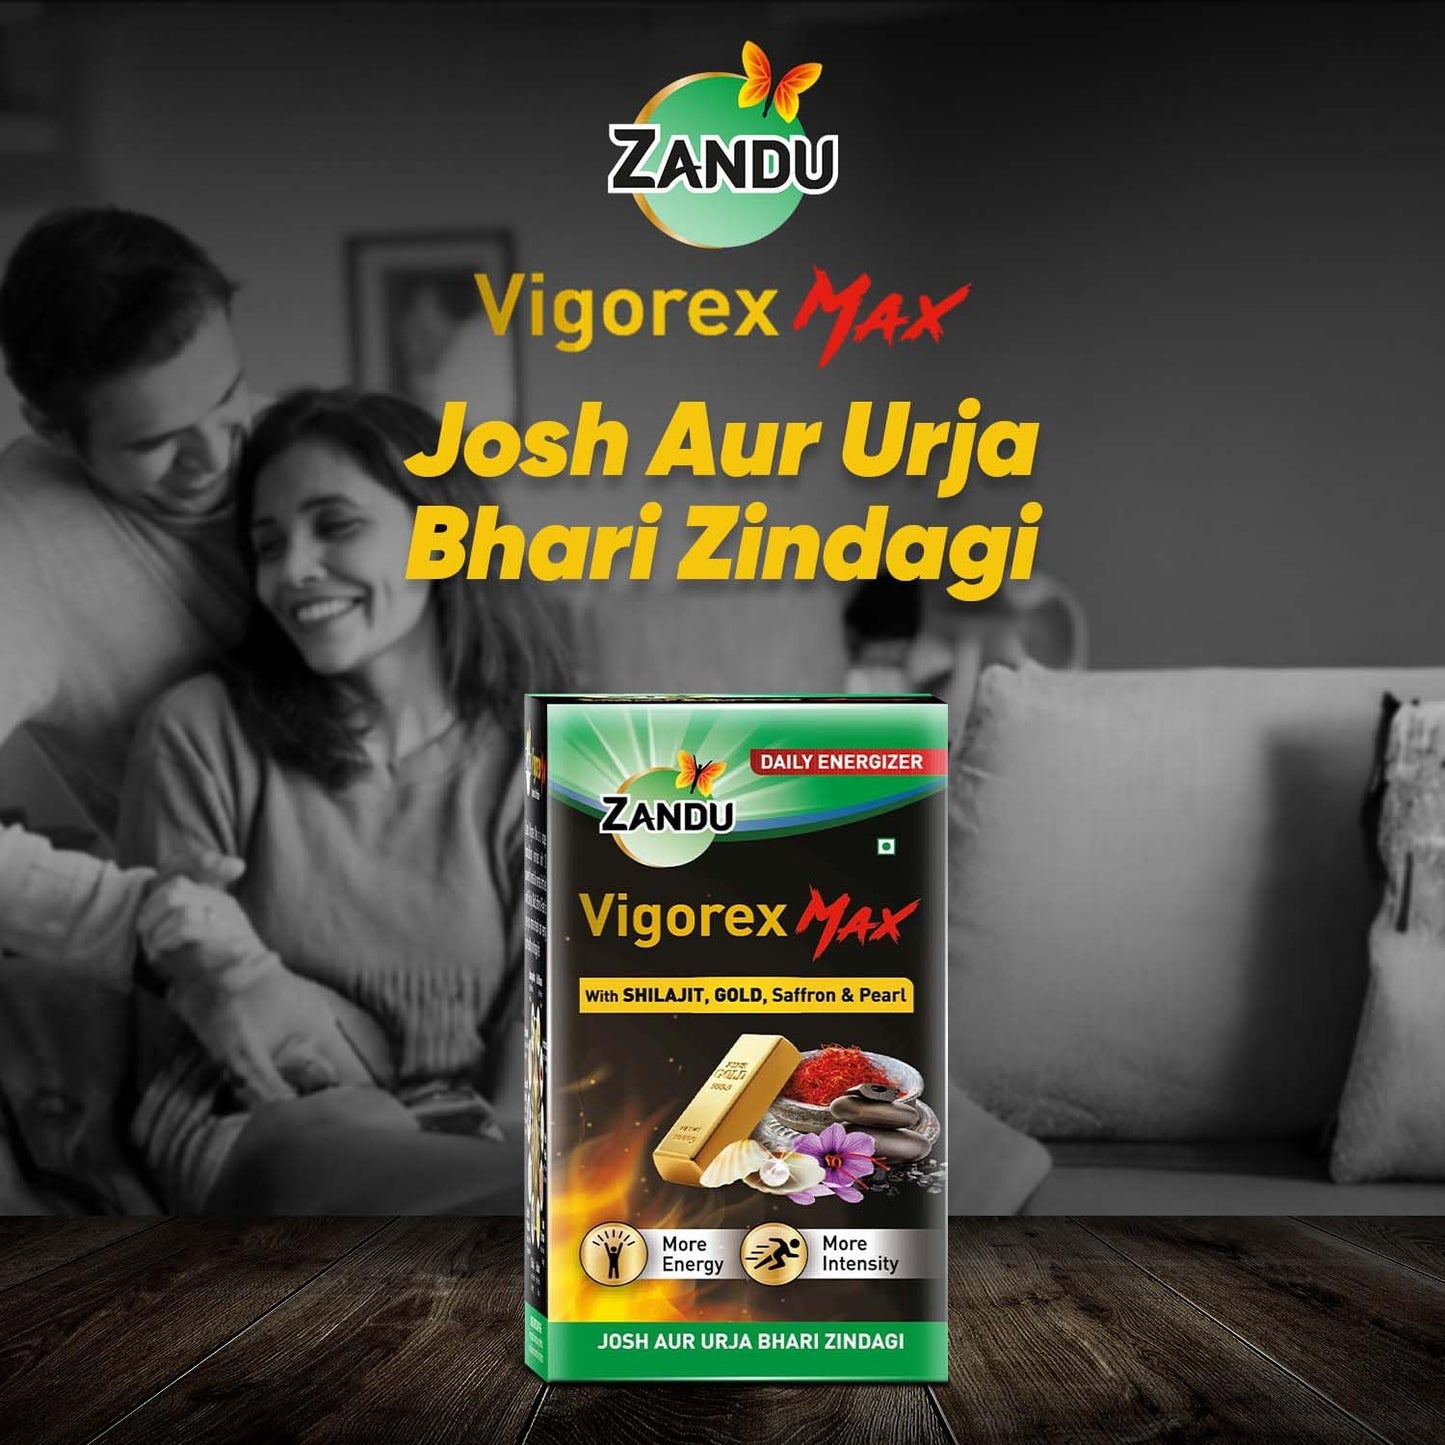 Zandu Vigorex MAX, 20 caps, enriched with Shilajit, Gold, Saffron, Pearl and Ashwagandha for intensity and energy